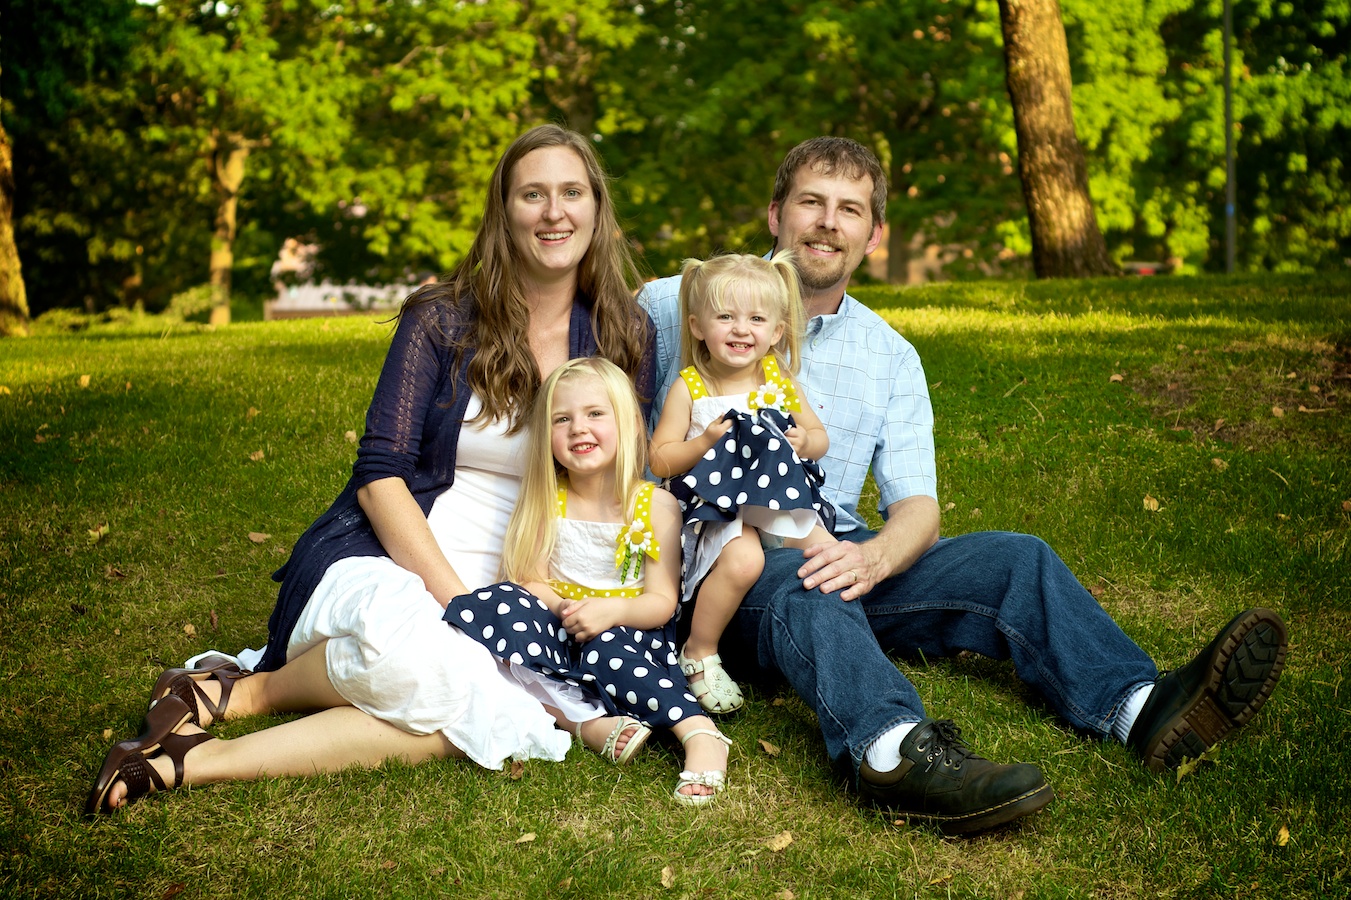 Family Portrait Photograpy, Salem and Keizer, Oregon